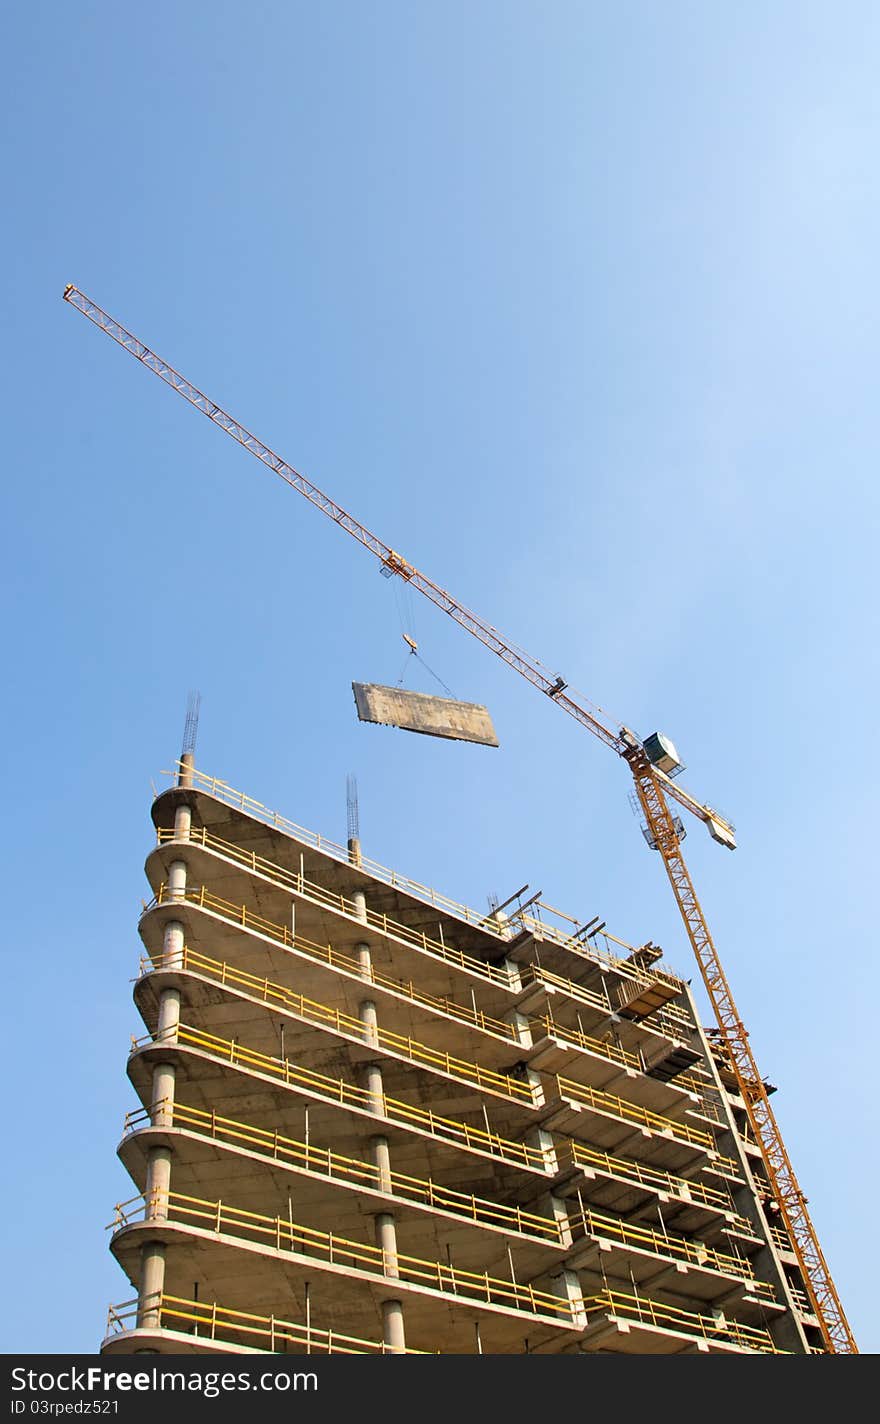 Crane and building construction site against blue sky. Crane and building construction site against blue sky